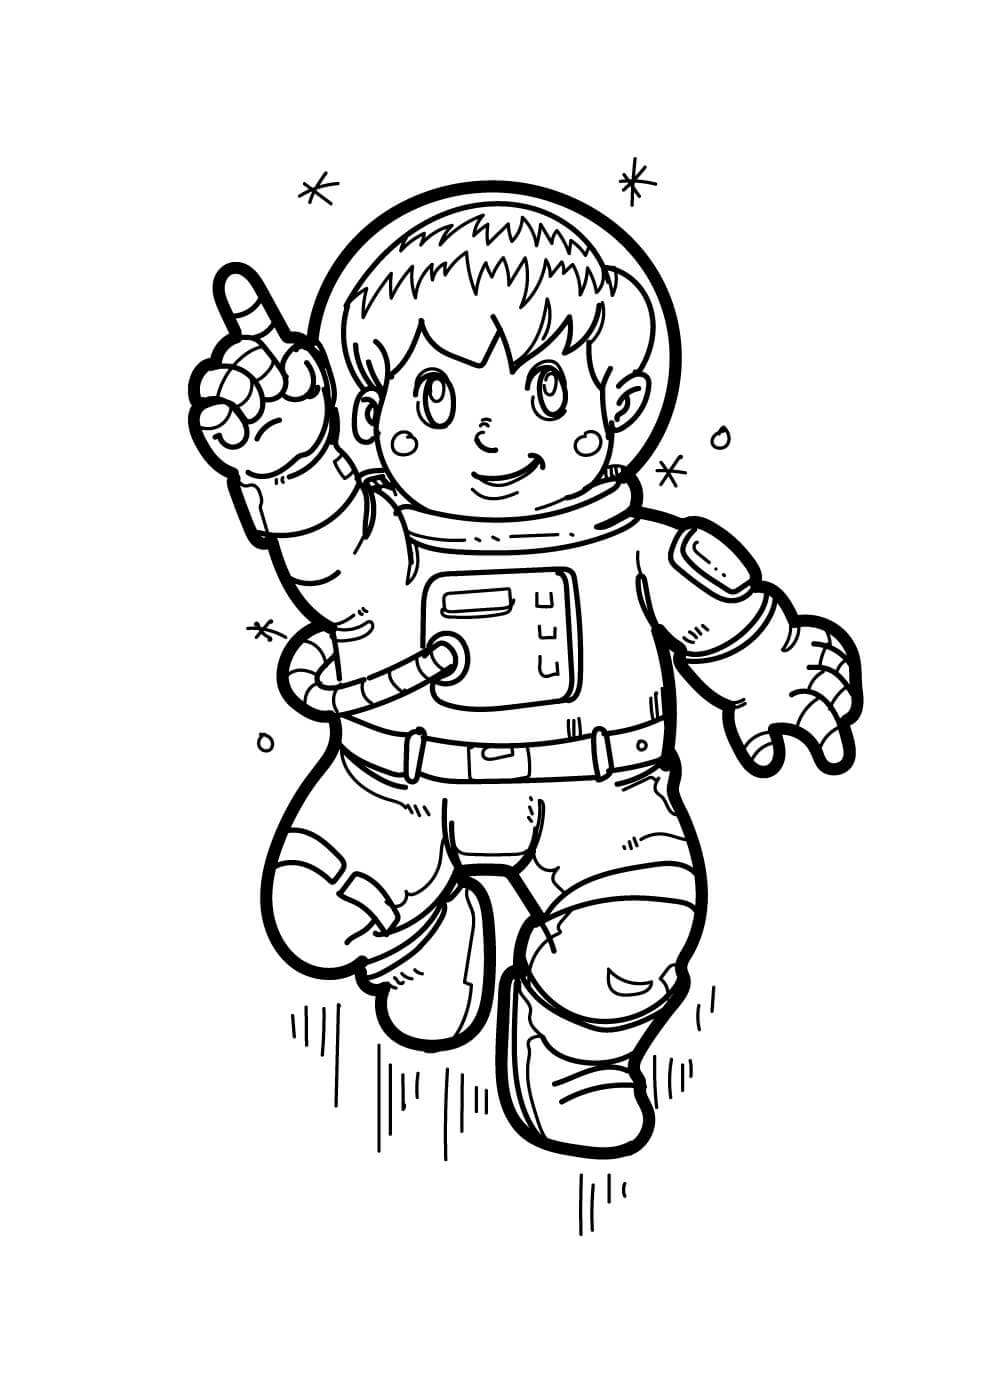 Lindo Chico Astronauta